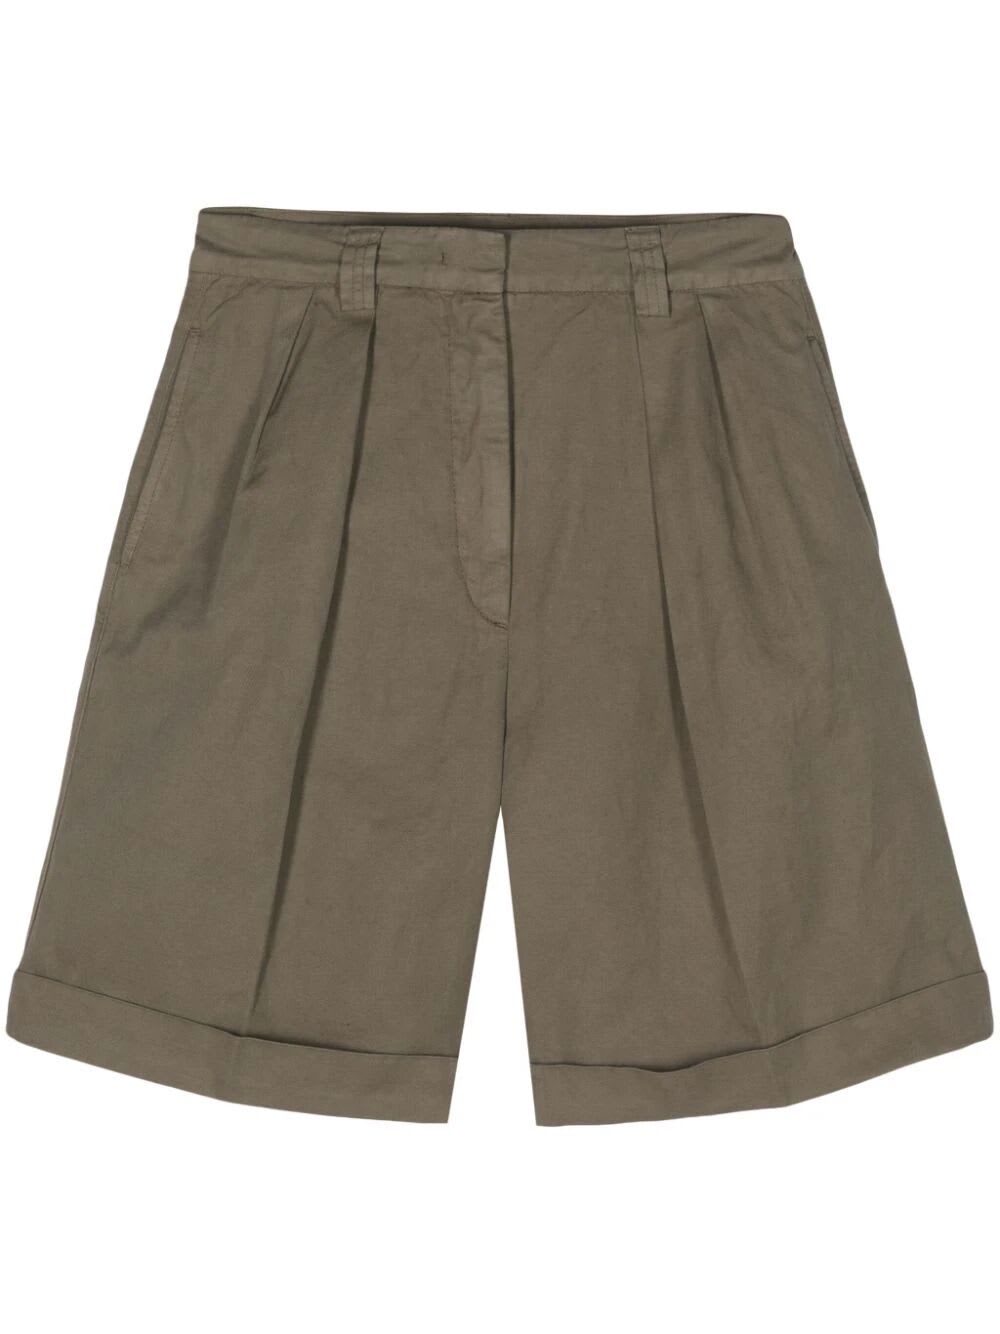 Mod 0210 Shorts